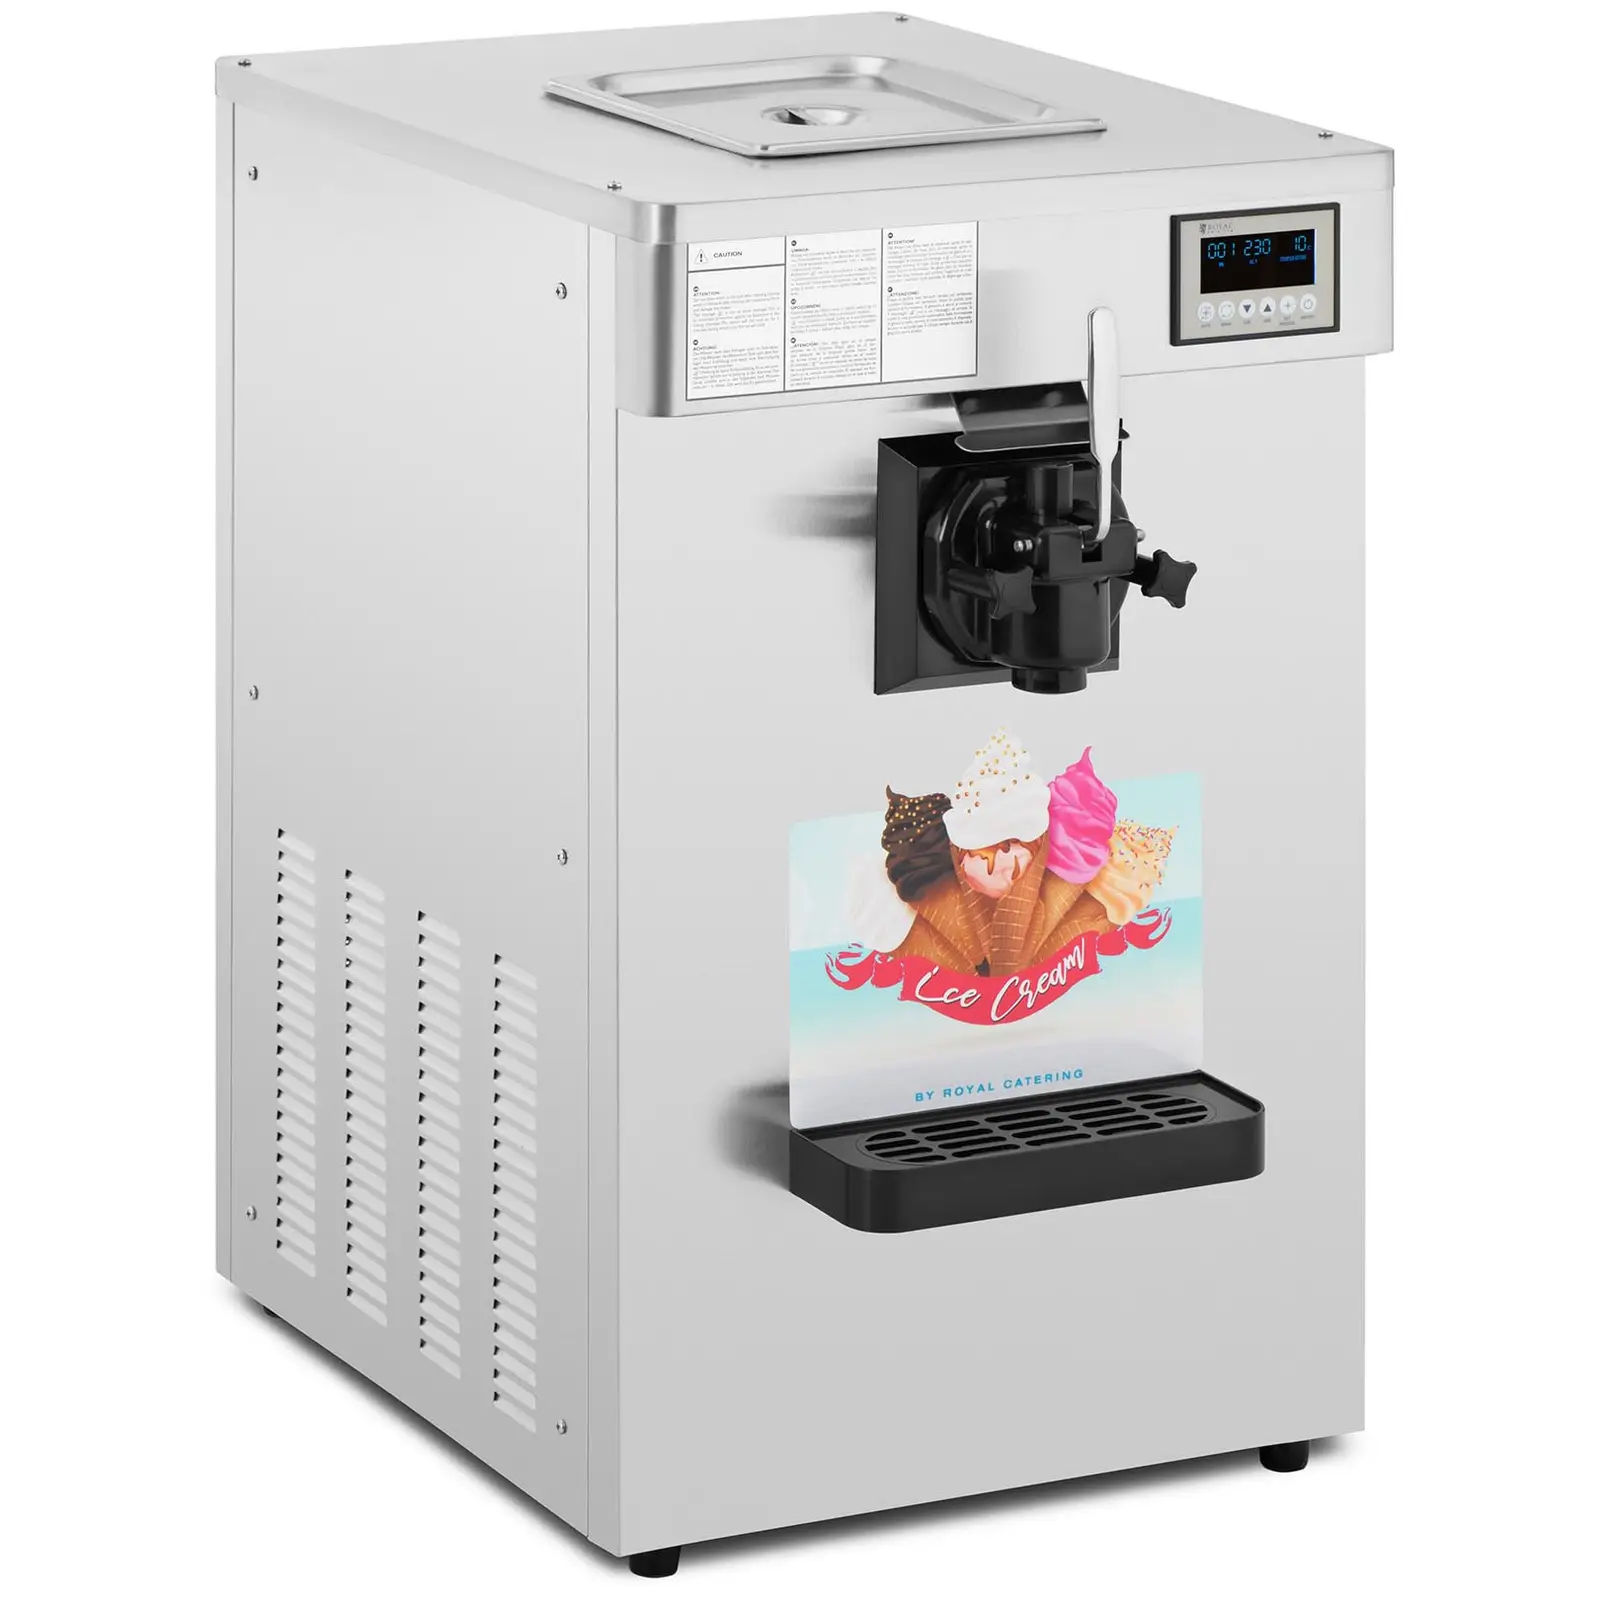 Stroj na točenou zmrzlinu - 1 150 W - 18 l/h - jednopákový - Royal Catering